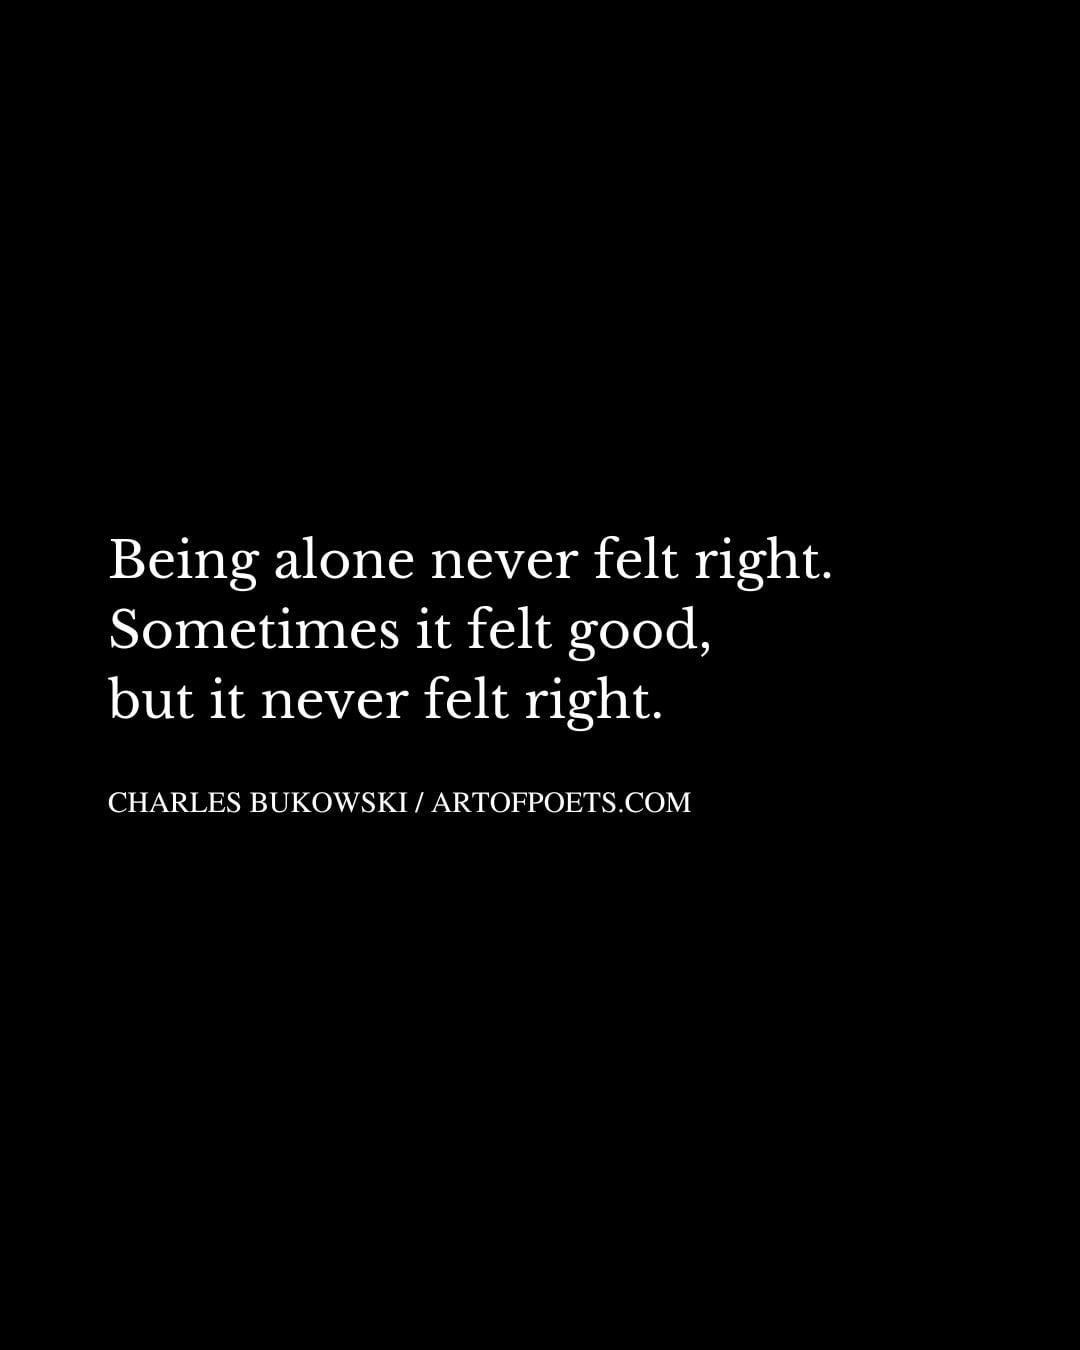 Being alone never felt right. Sometimes it felt good but it never felt right